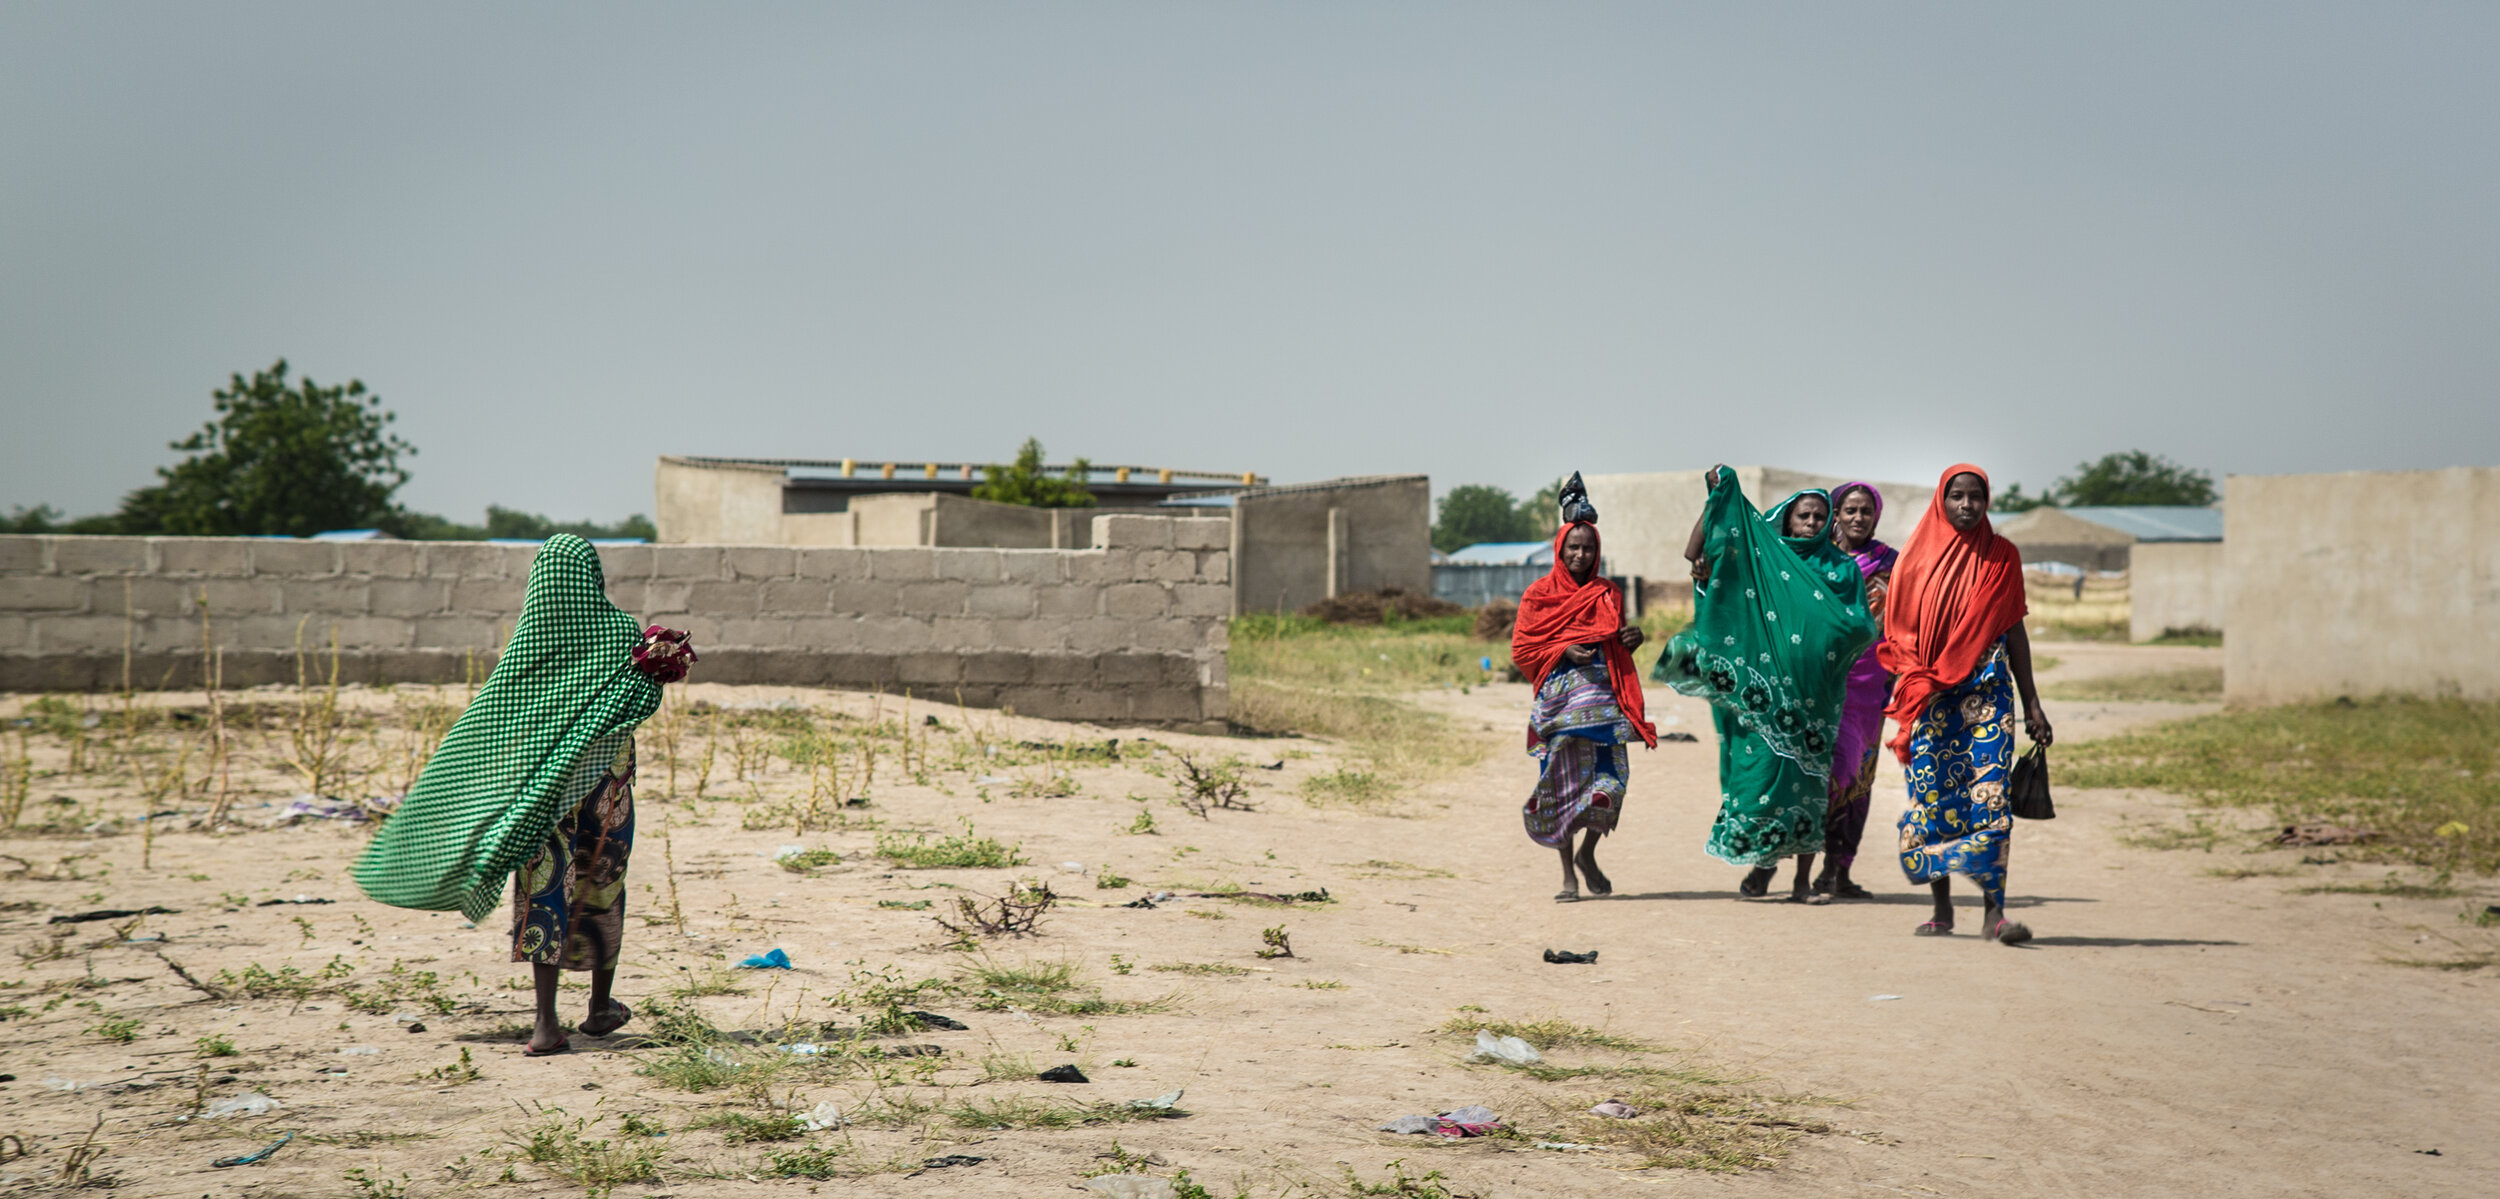  Dalti IDP camp, Maiduguri, northeastern Nigeria. November 2018 